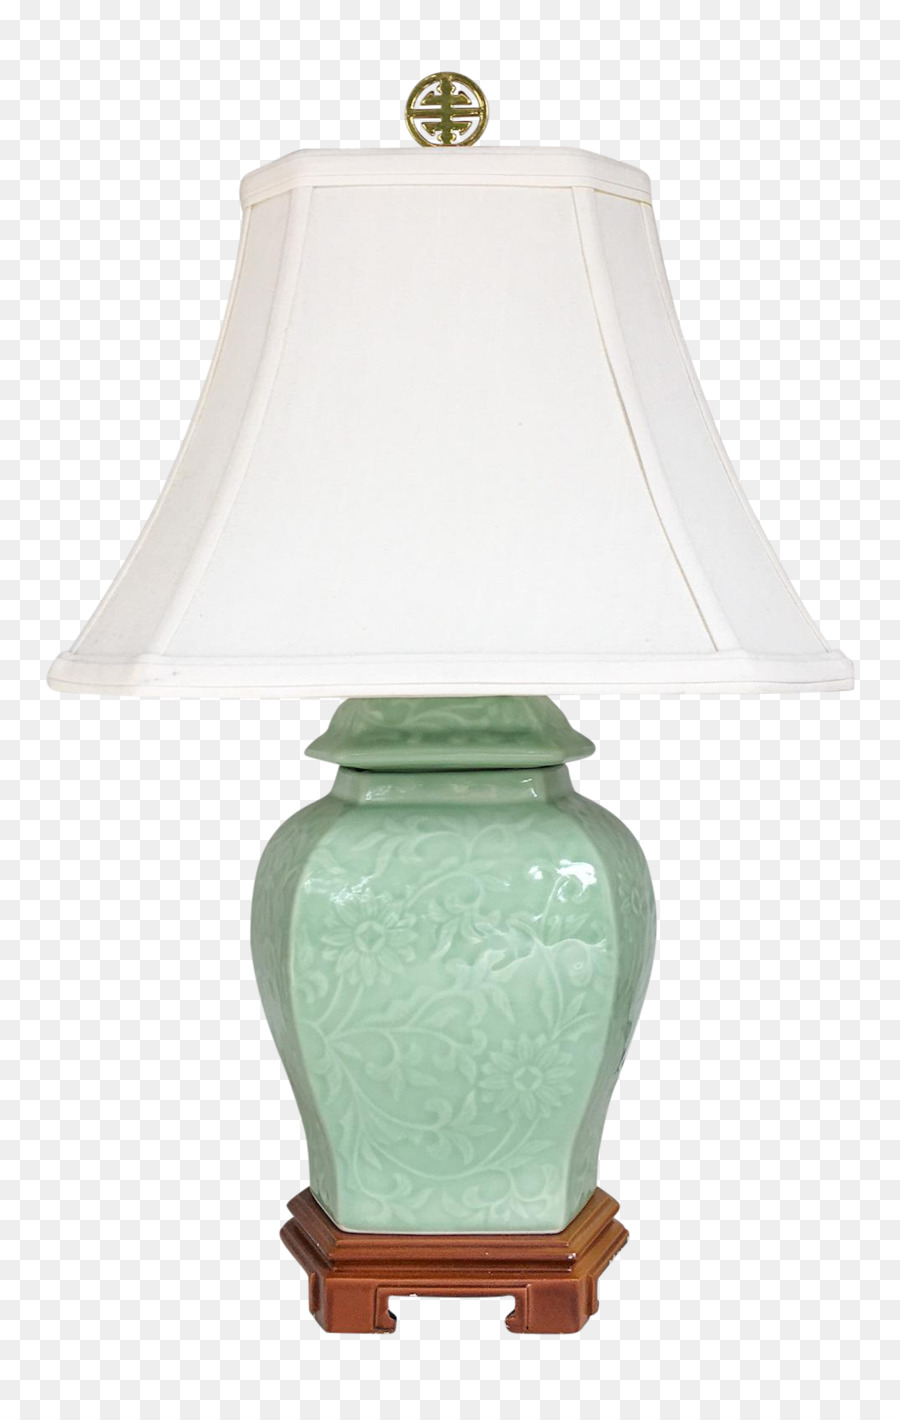 La lampada di Illuminazione - cineserie